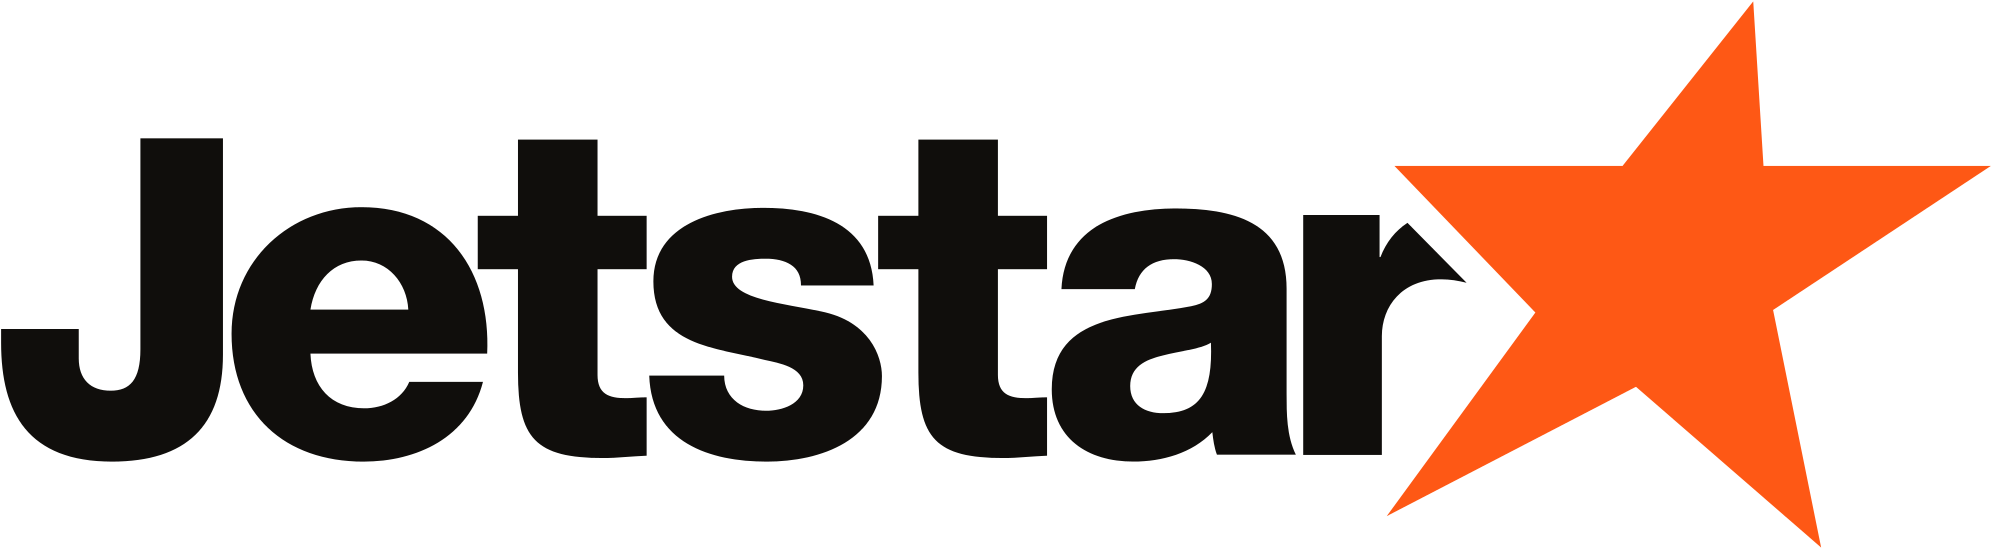 Jetstar Customer Service Contact Details - Jetstar Logo Png (2000x557)